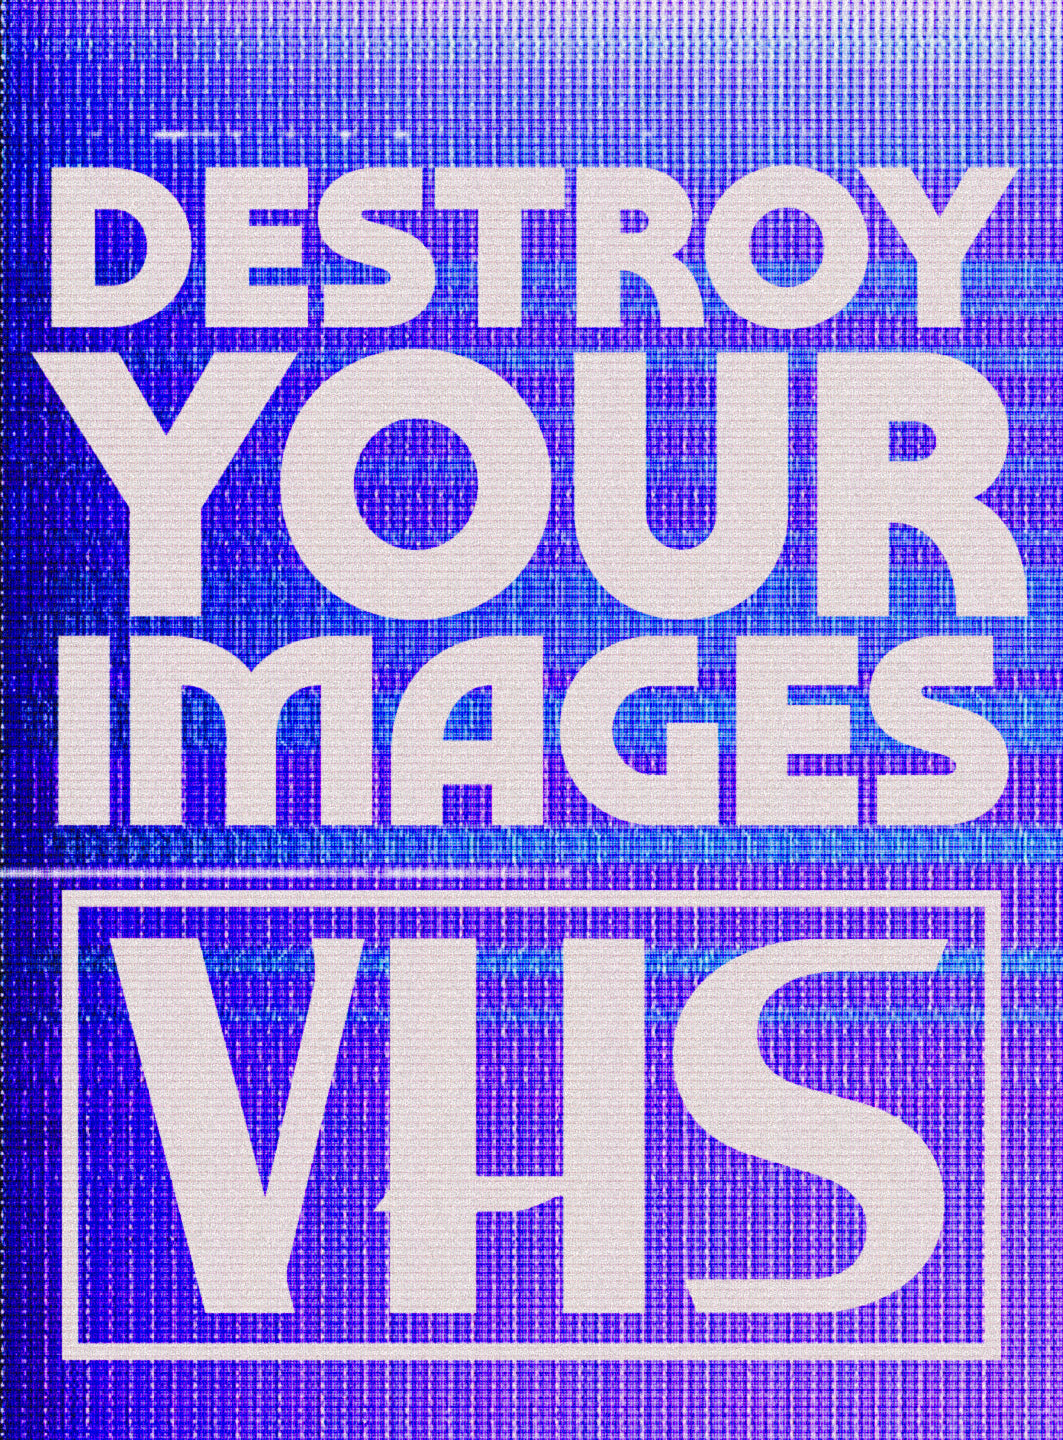 VHS Texture Pack - Destroy Your Still Images!